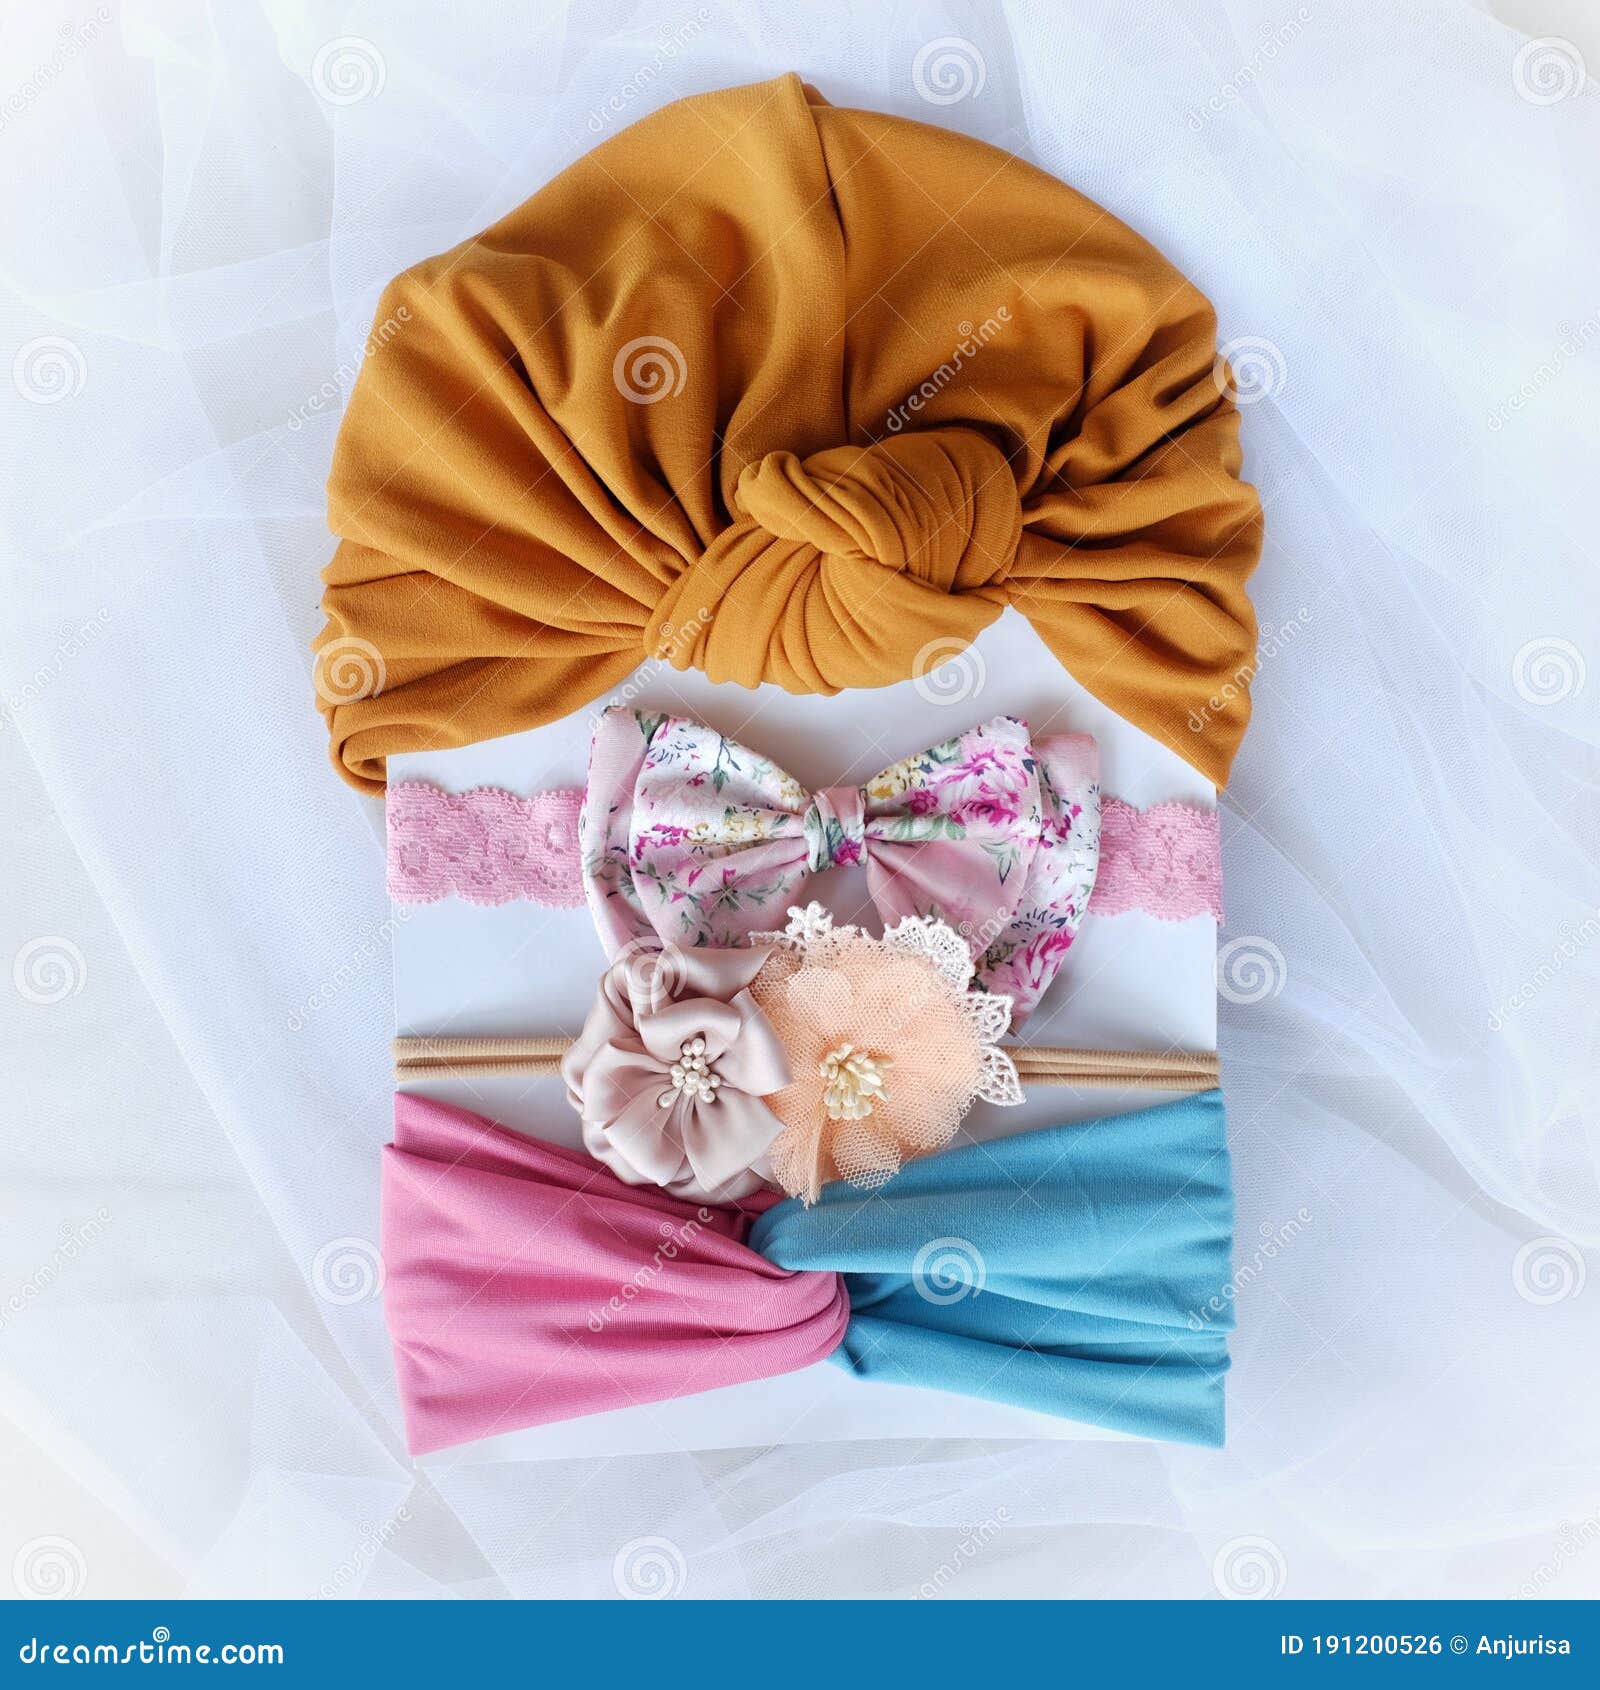 PALAY Crystal Tiara Crown Pearl Princess Costume Crown Headband Flower  Pageant Handmade Hair Accessories CosplayBirthdayCelebration for Girl  Women